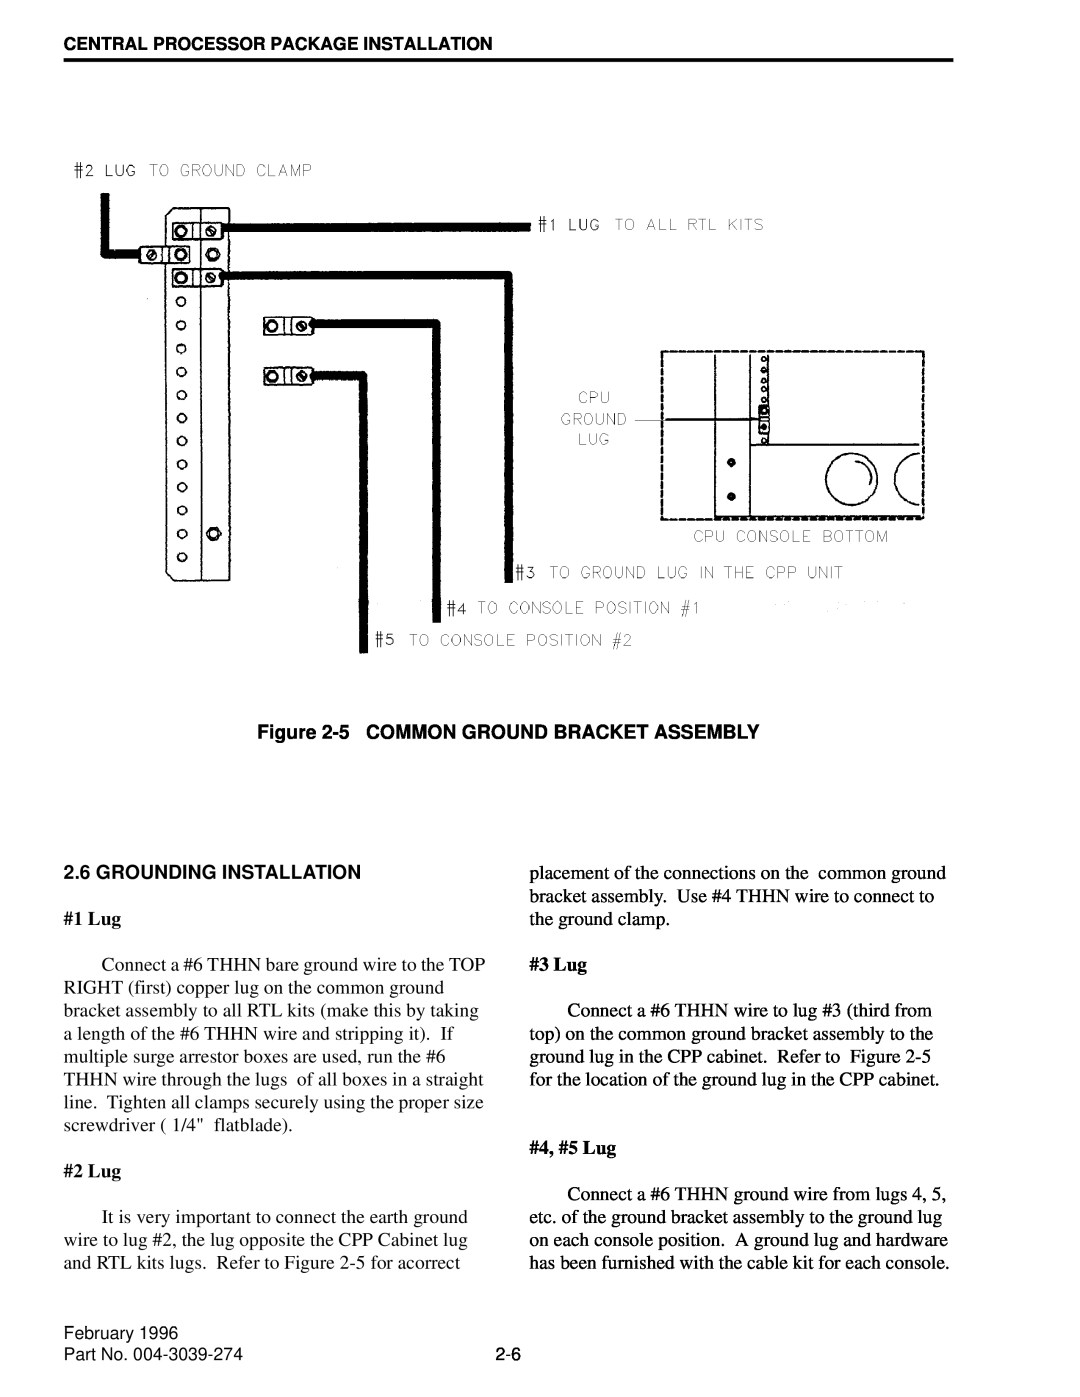 EFJohnson VR-CM50 manual 5COMMON GROUND BRACKET ASSEMBLY, Grounding Installation, #1 Lug, #2 Lug, #3 Lug, #4, #5 Lug 